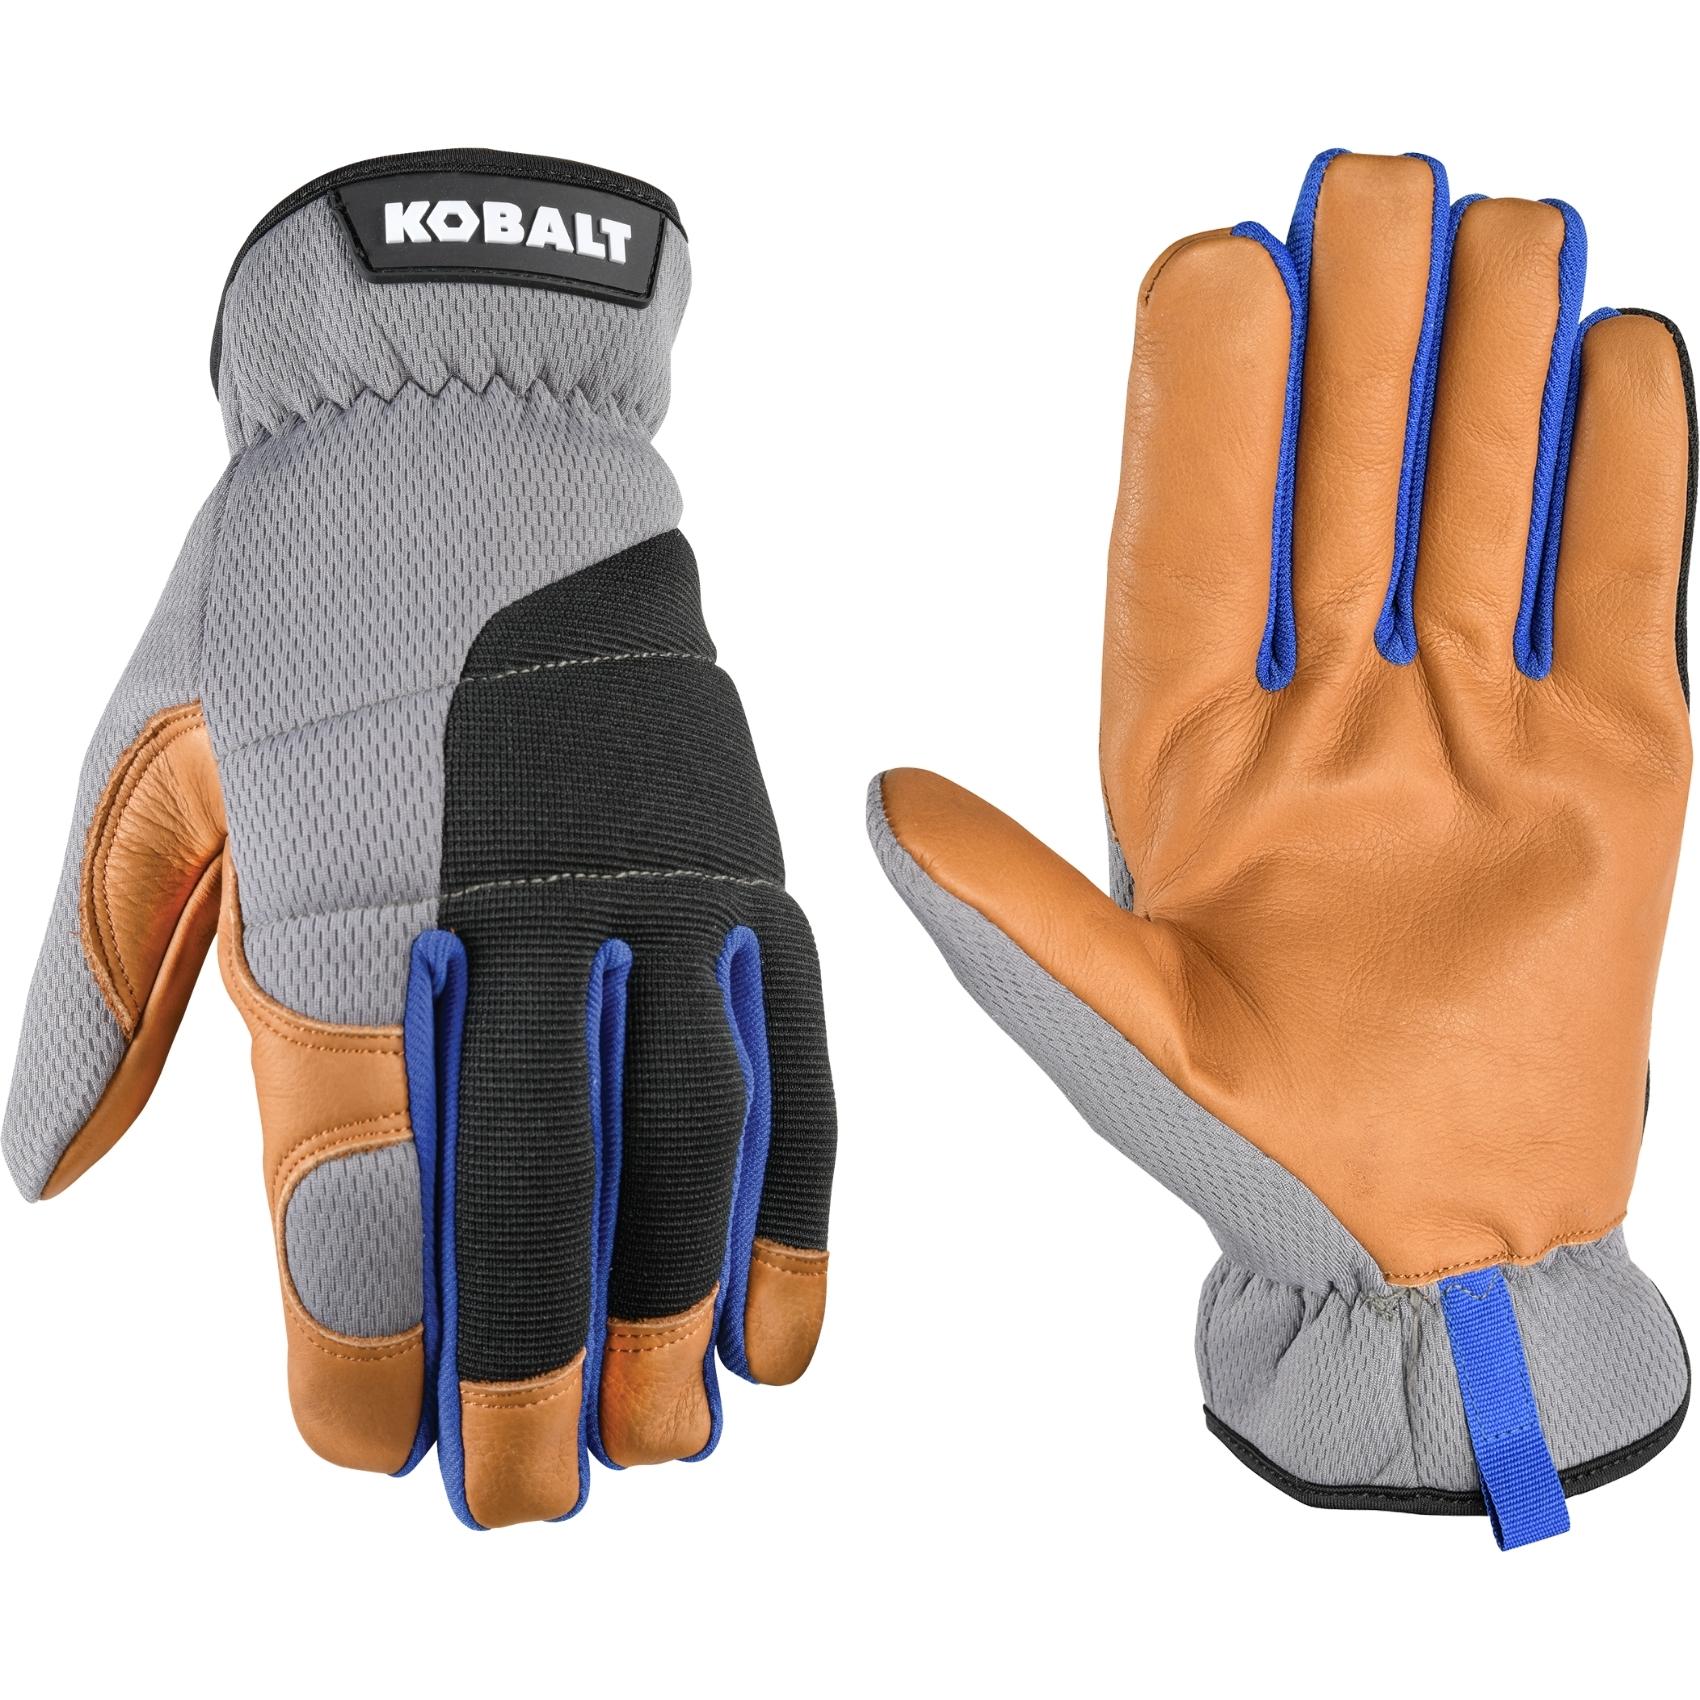 Kobalt Work Gloves at